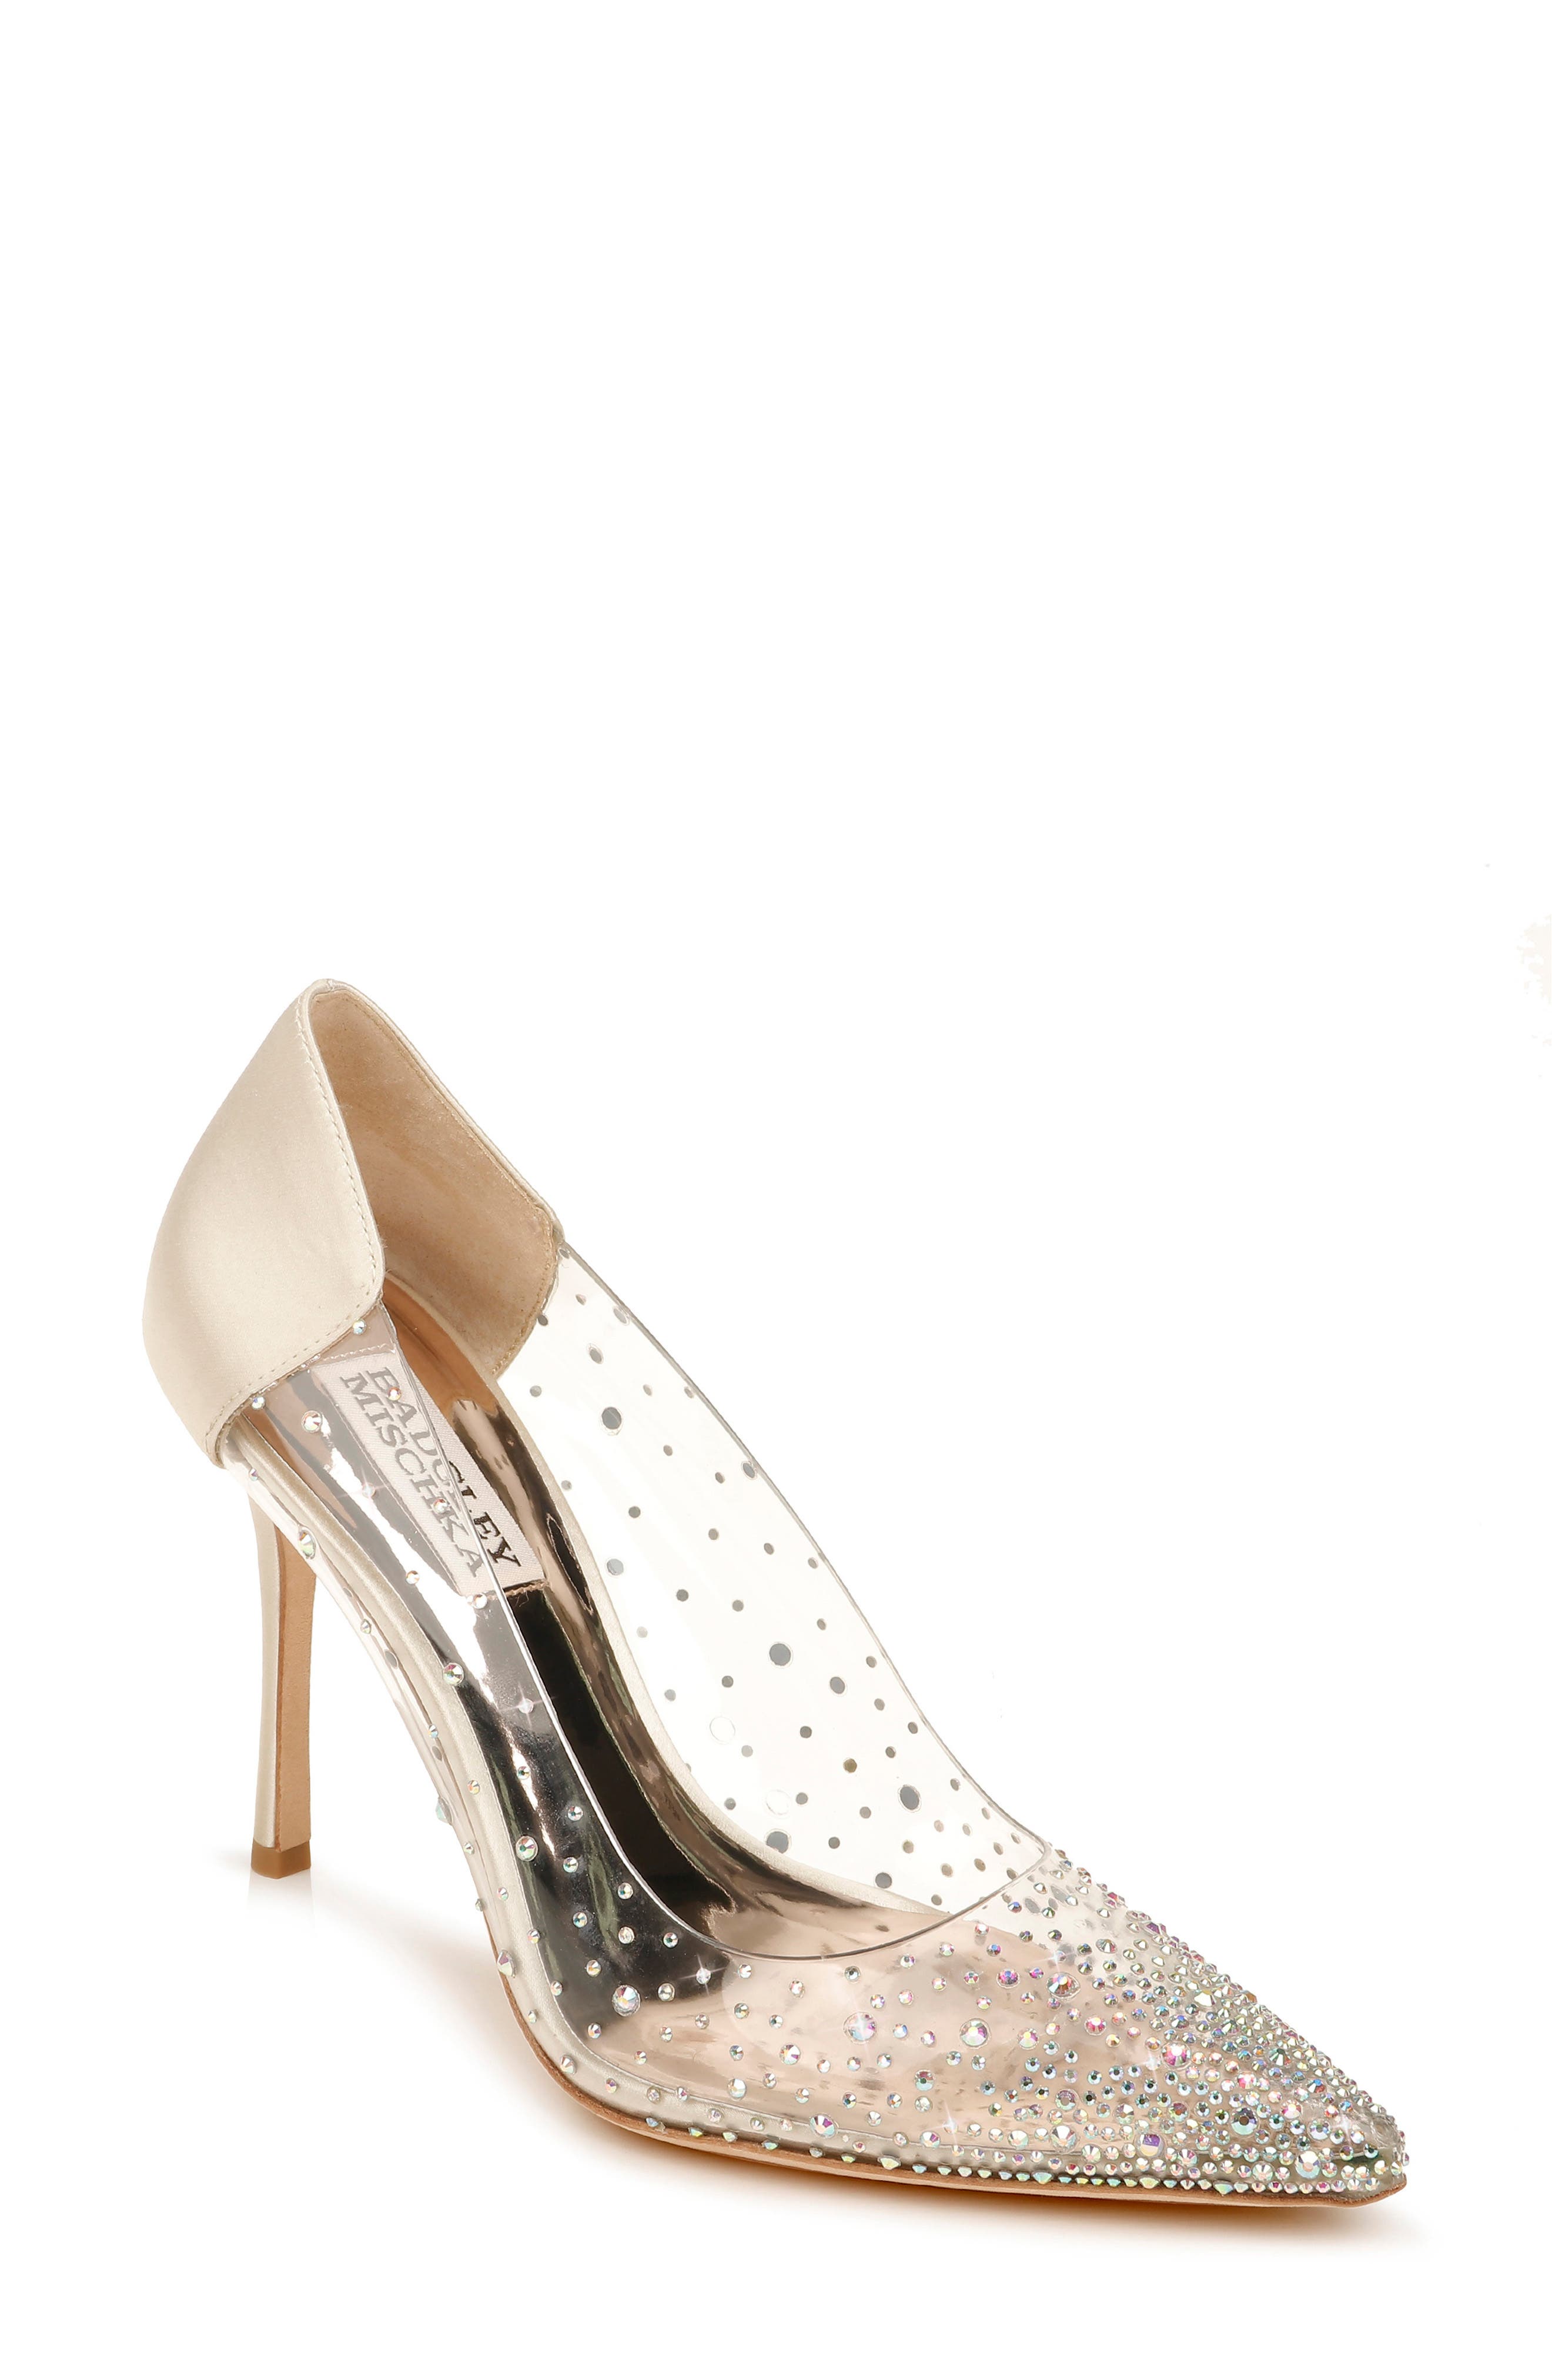 off white low heels